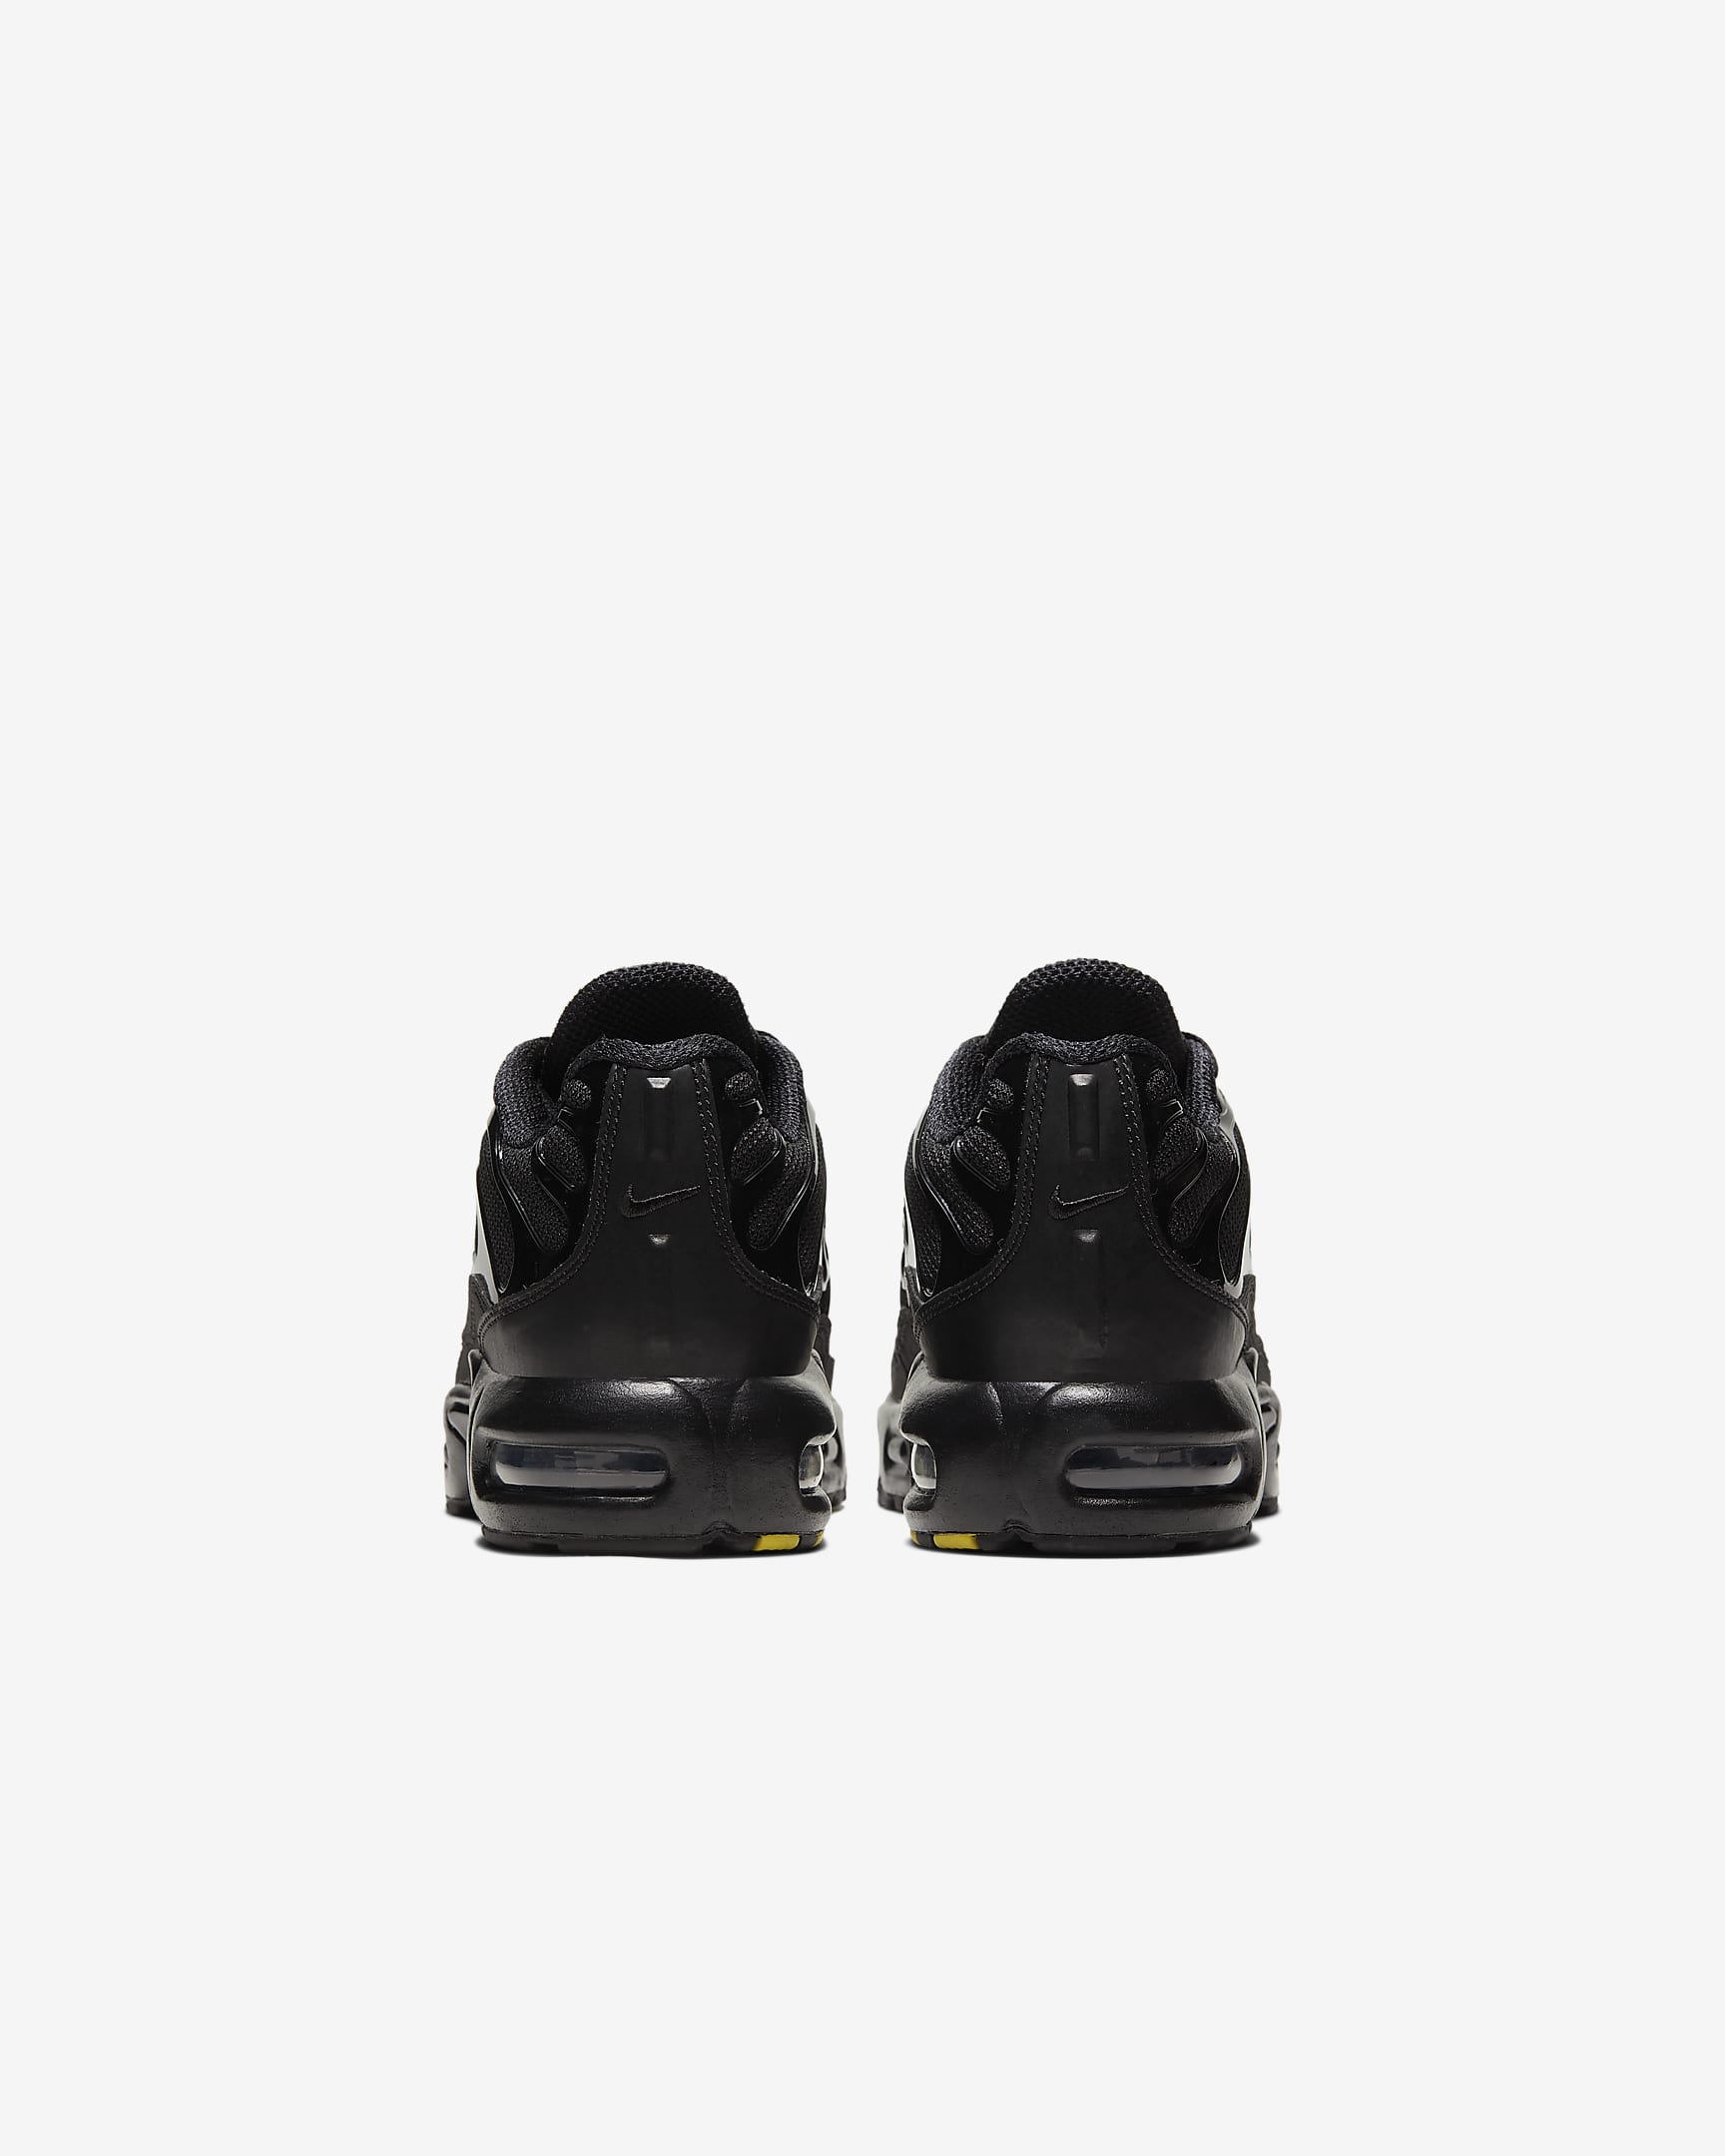 Nike Air Max Plus Younger Kids' Shoes - Black/Black/Black